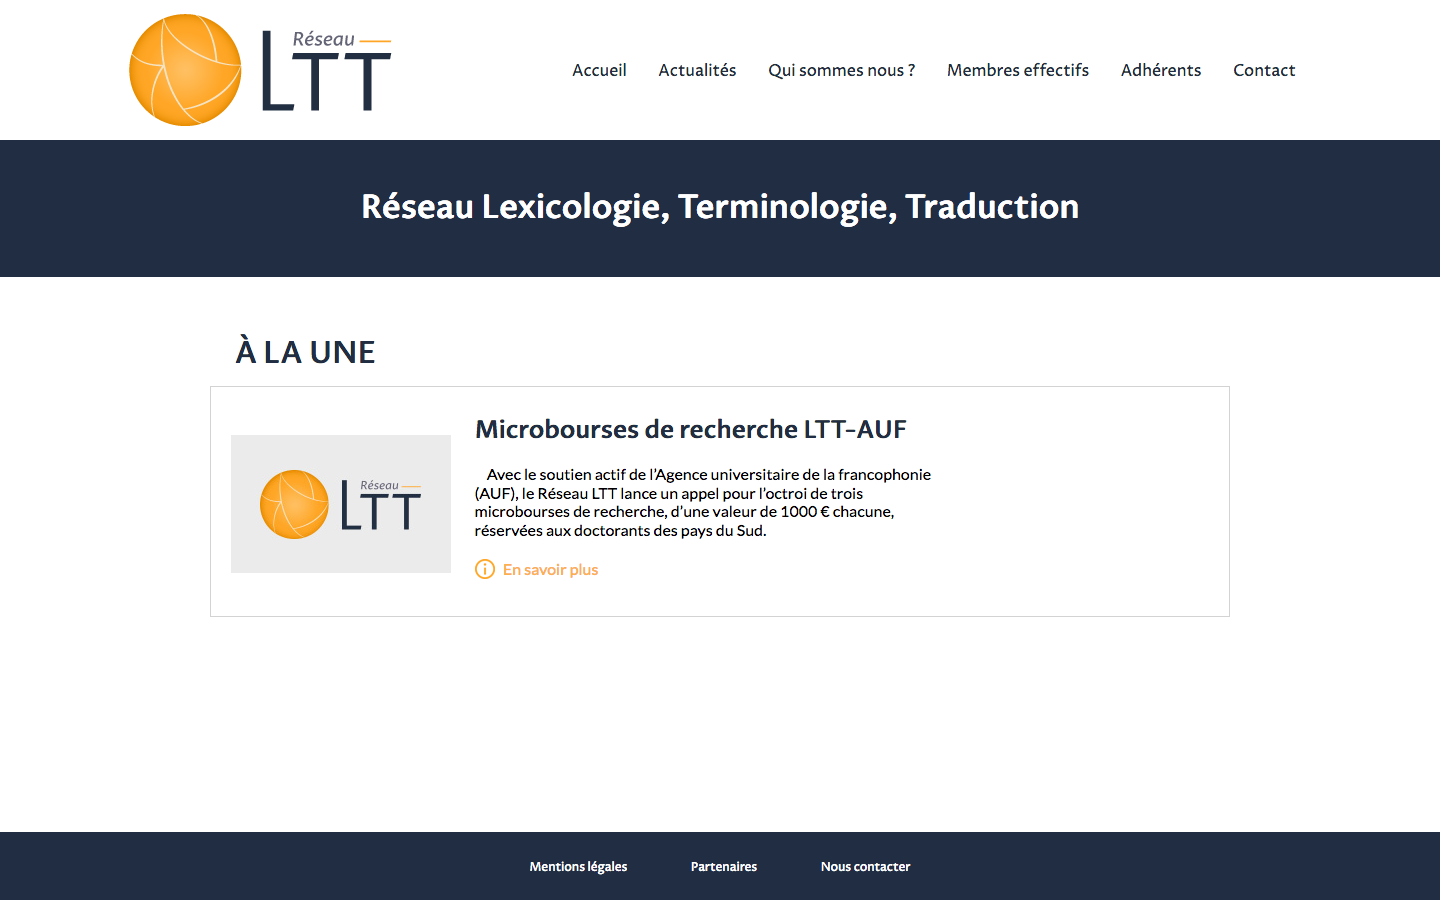 Réseau LTT website illustration